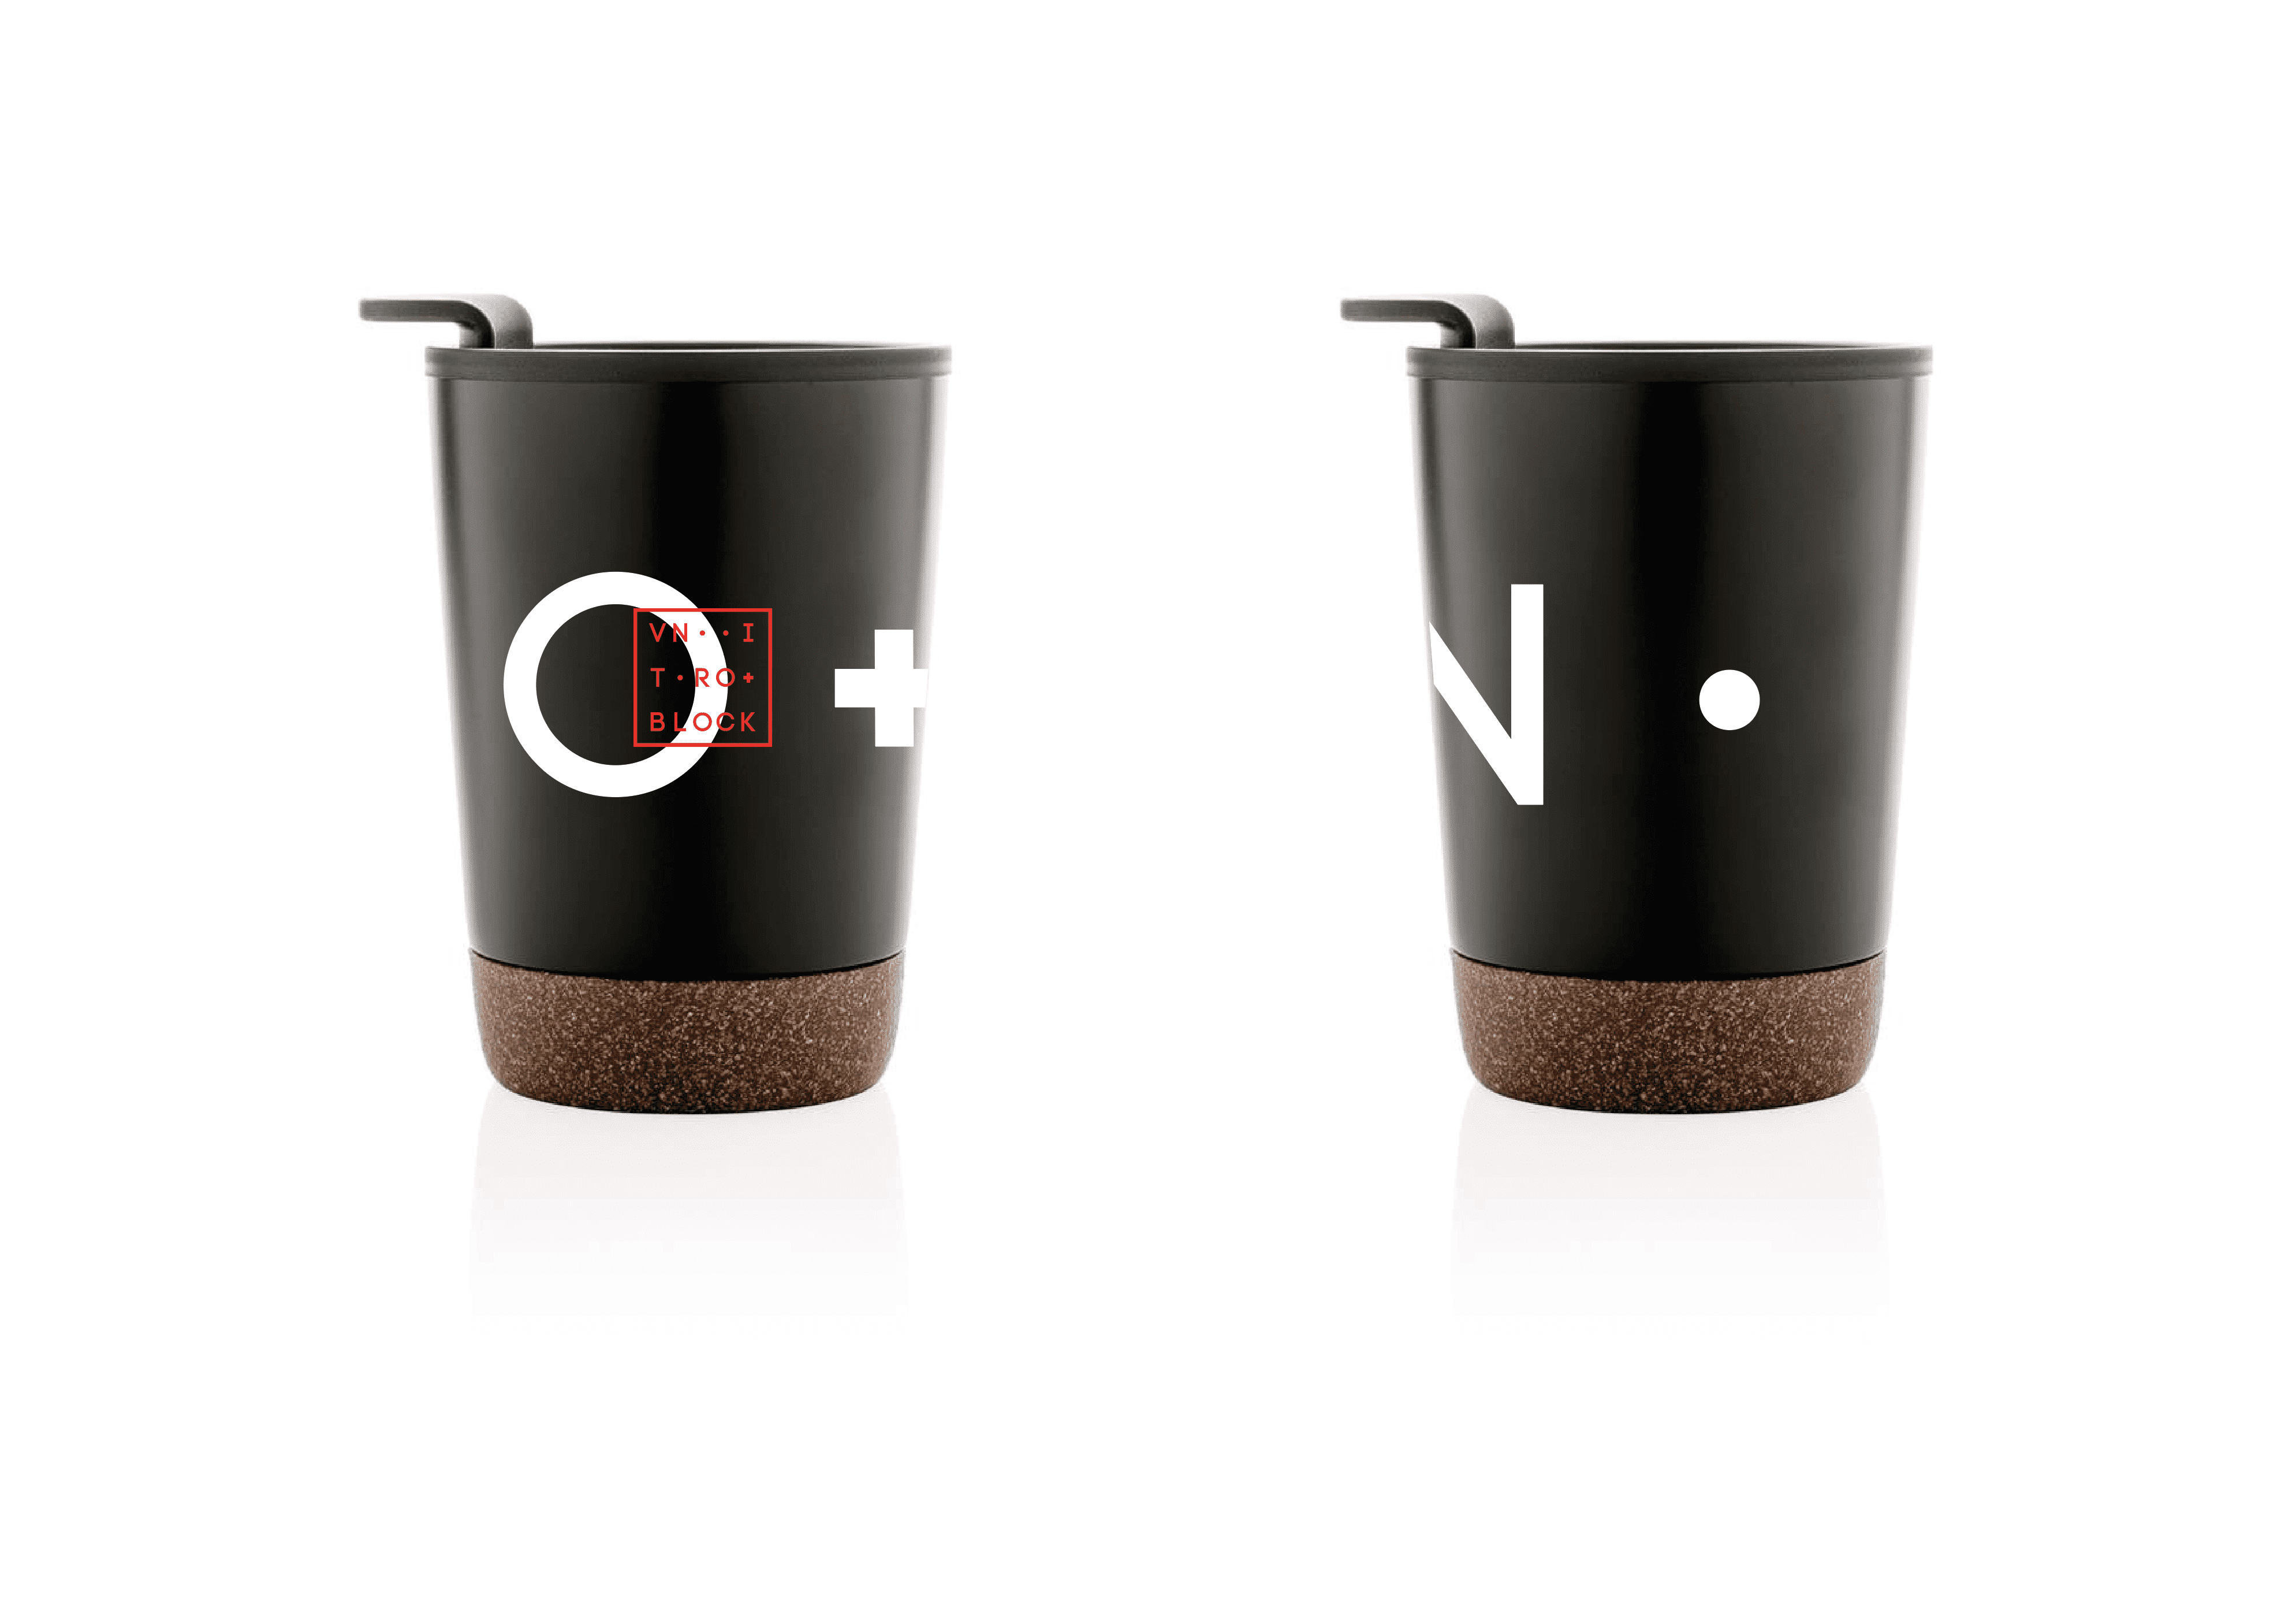 design produktu pro kavárnu - termohrnky